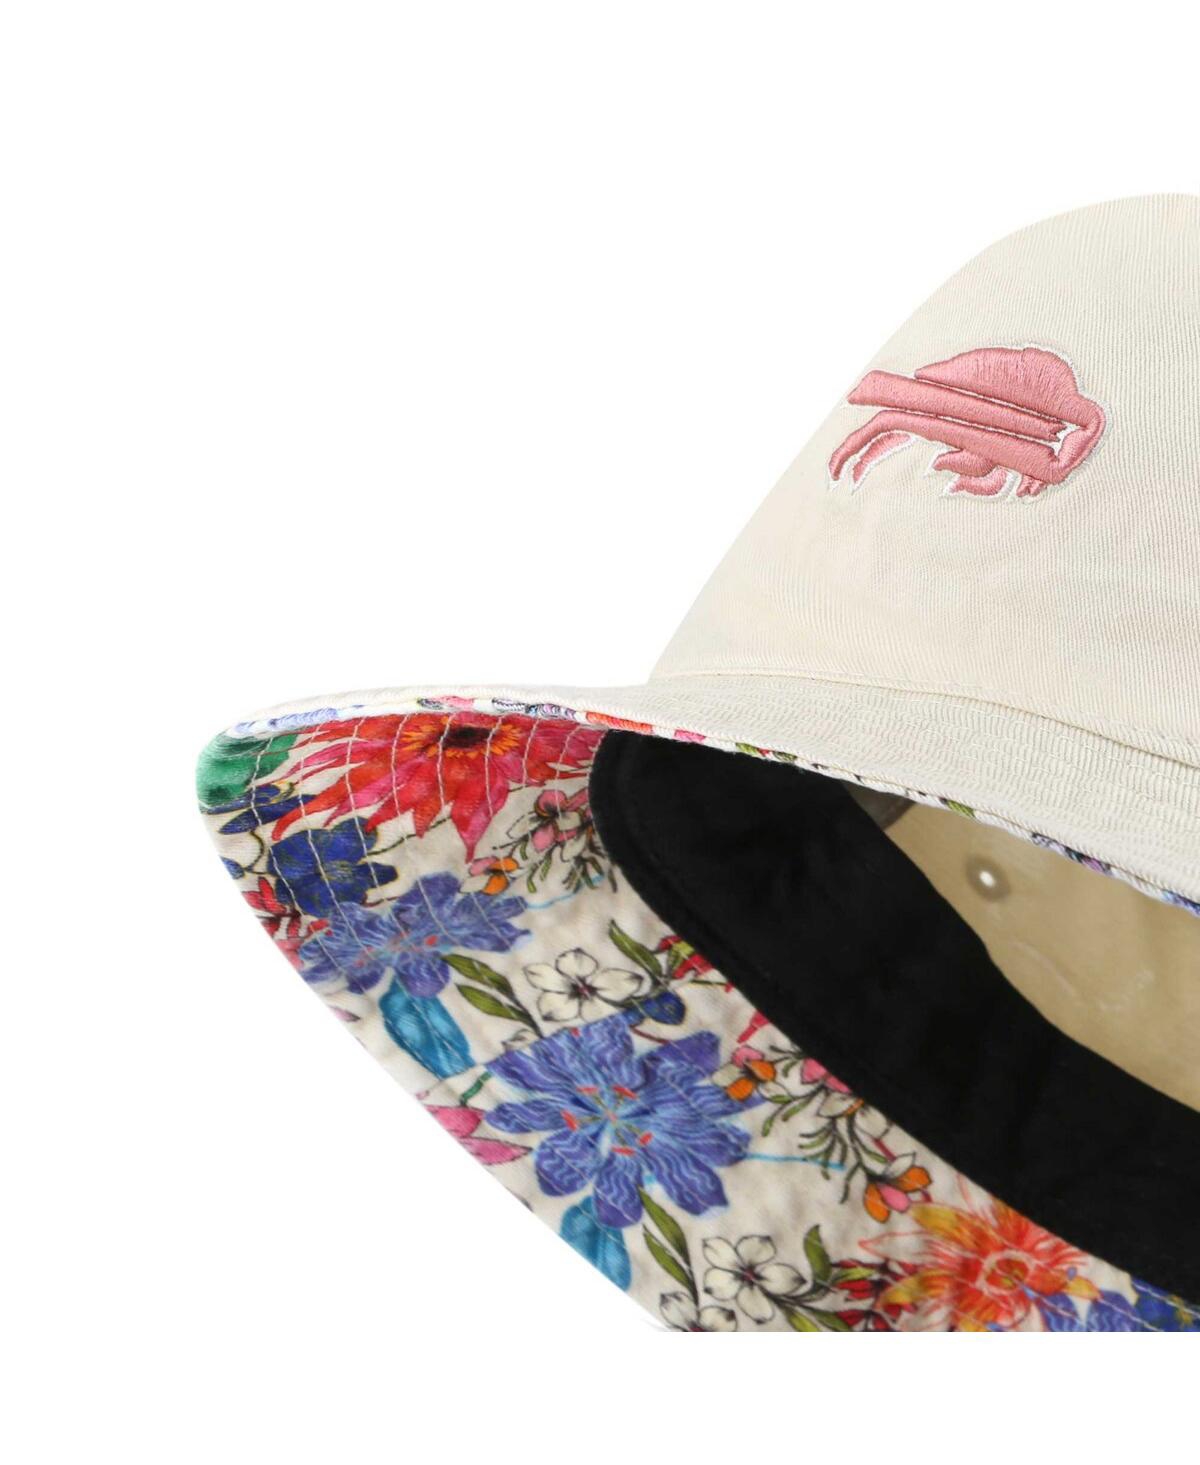 Shop 47 Brand Women's ' Natural Buffalo Bills Pollinator Bucket Hat